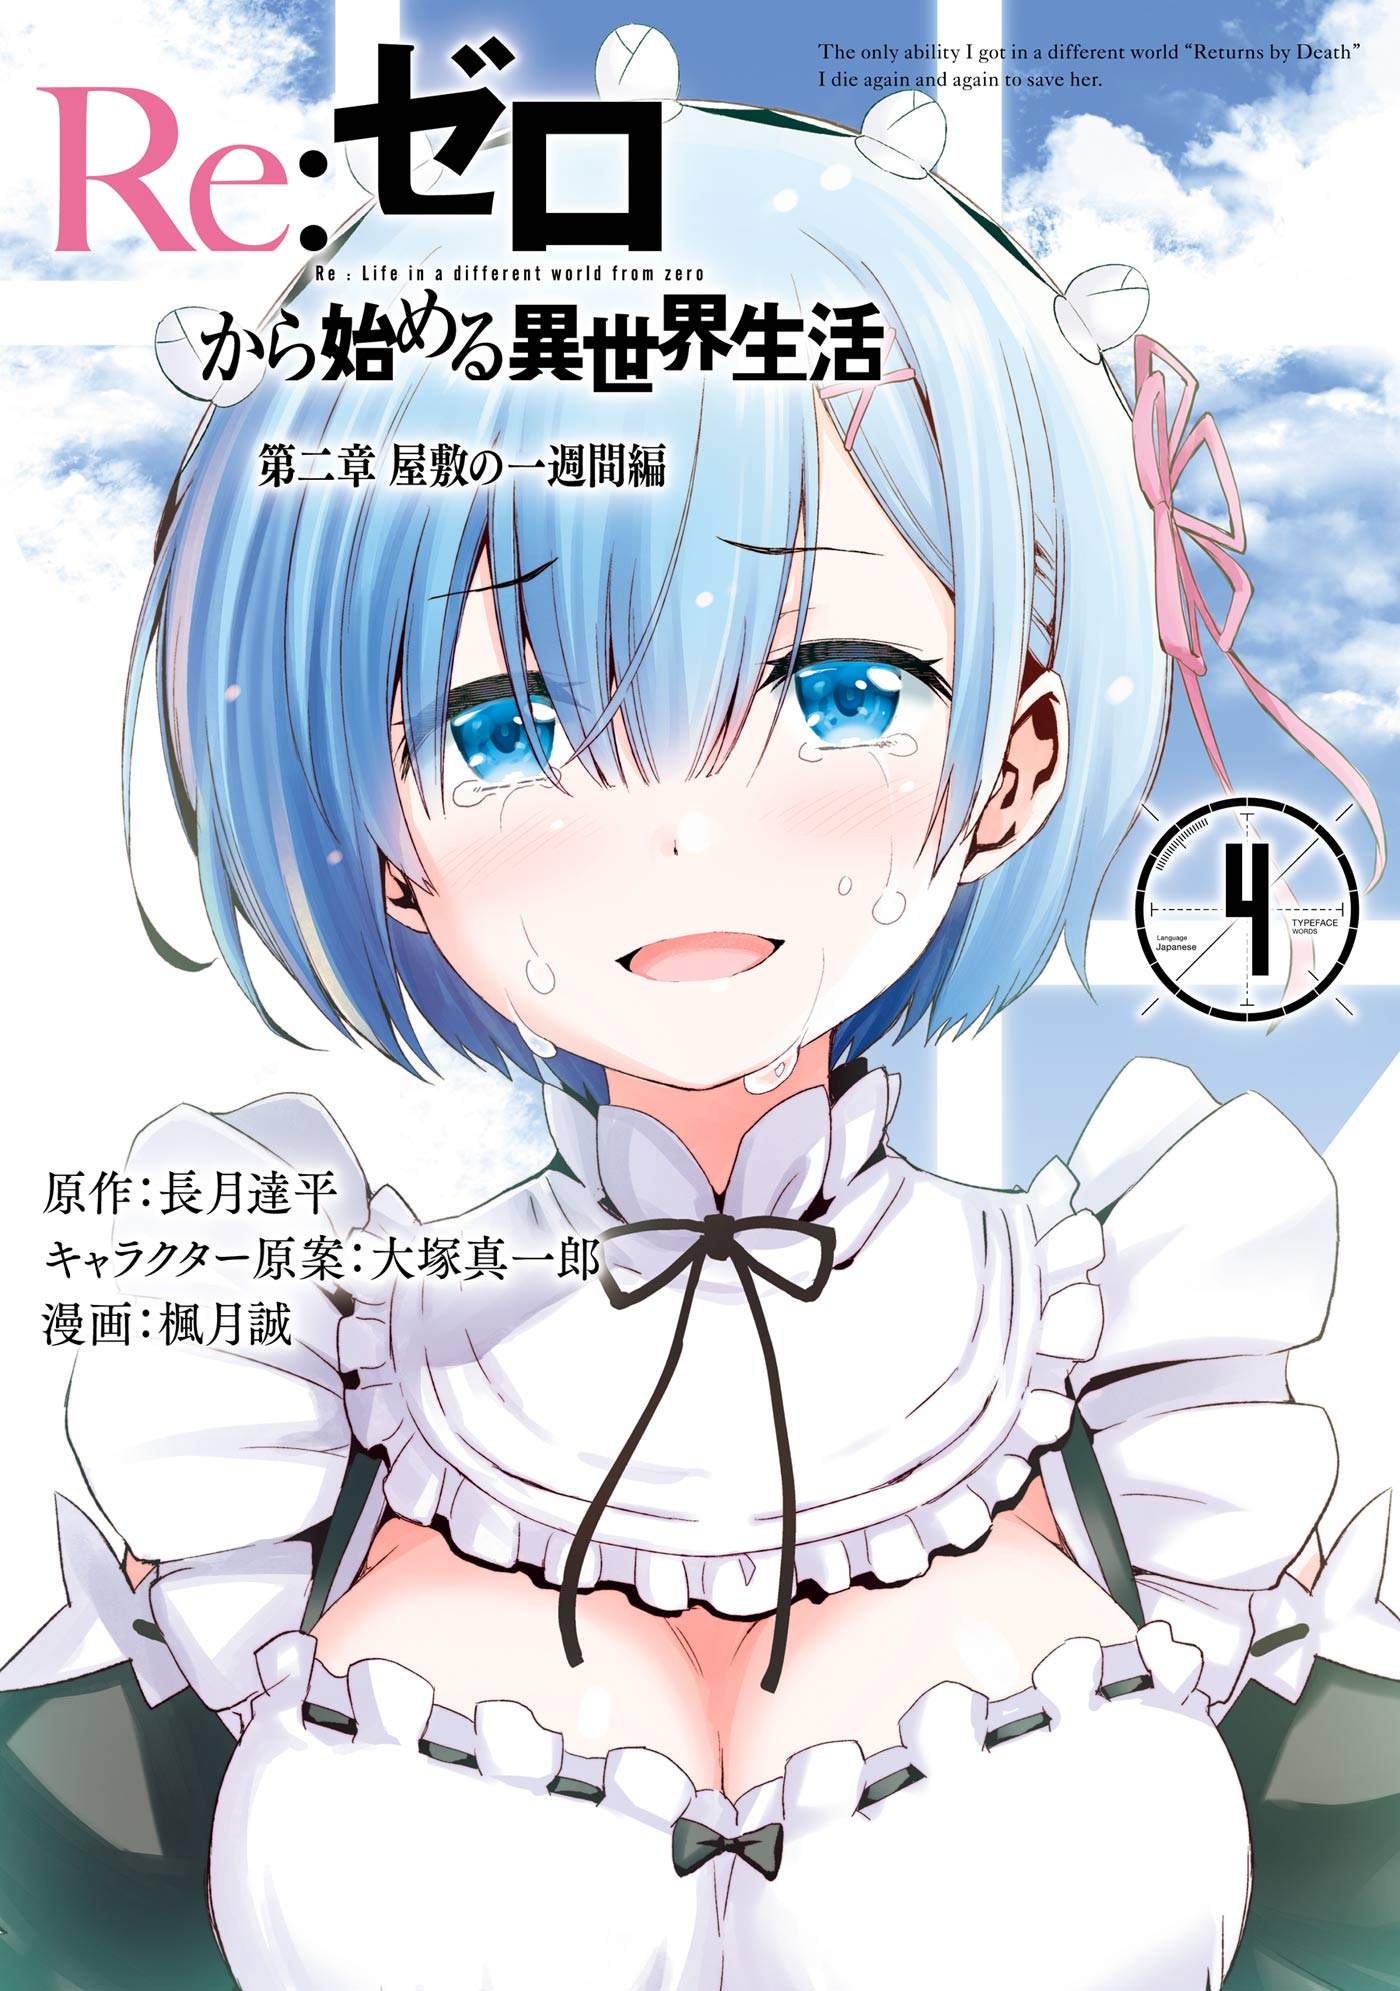 Re:ZERO -Starting Life in Another World- Ex (Light Novel) Manga